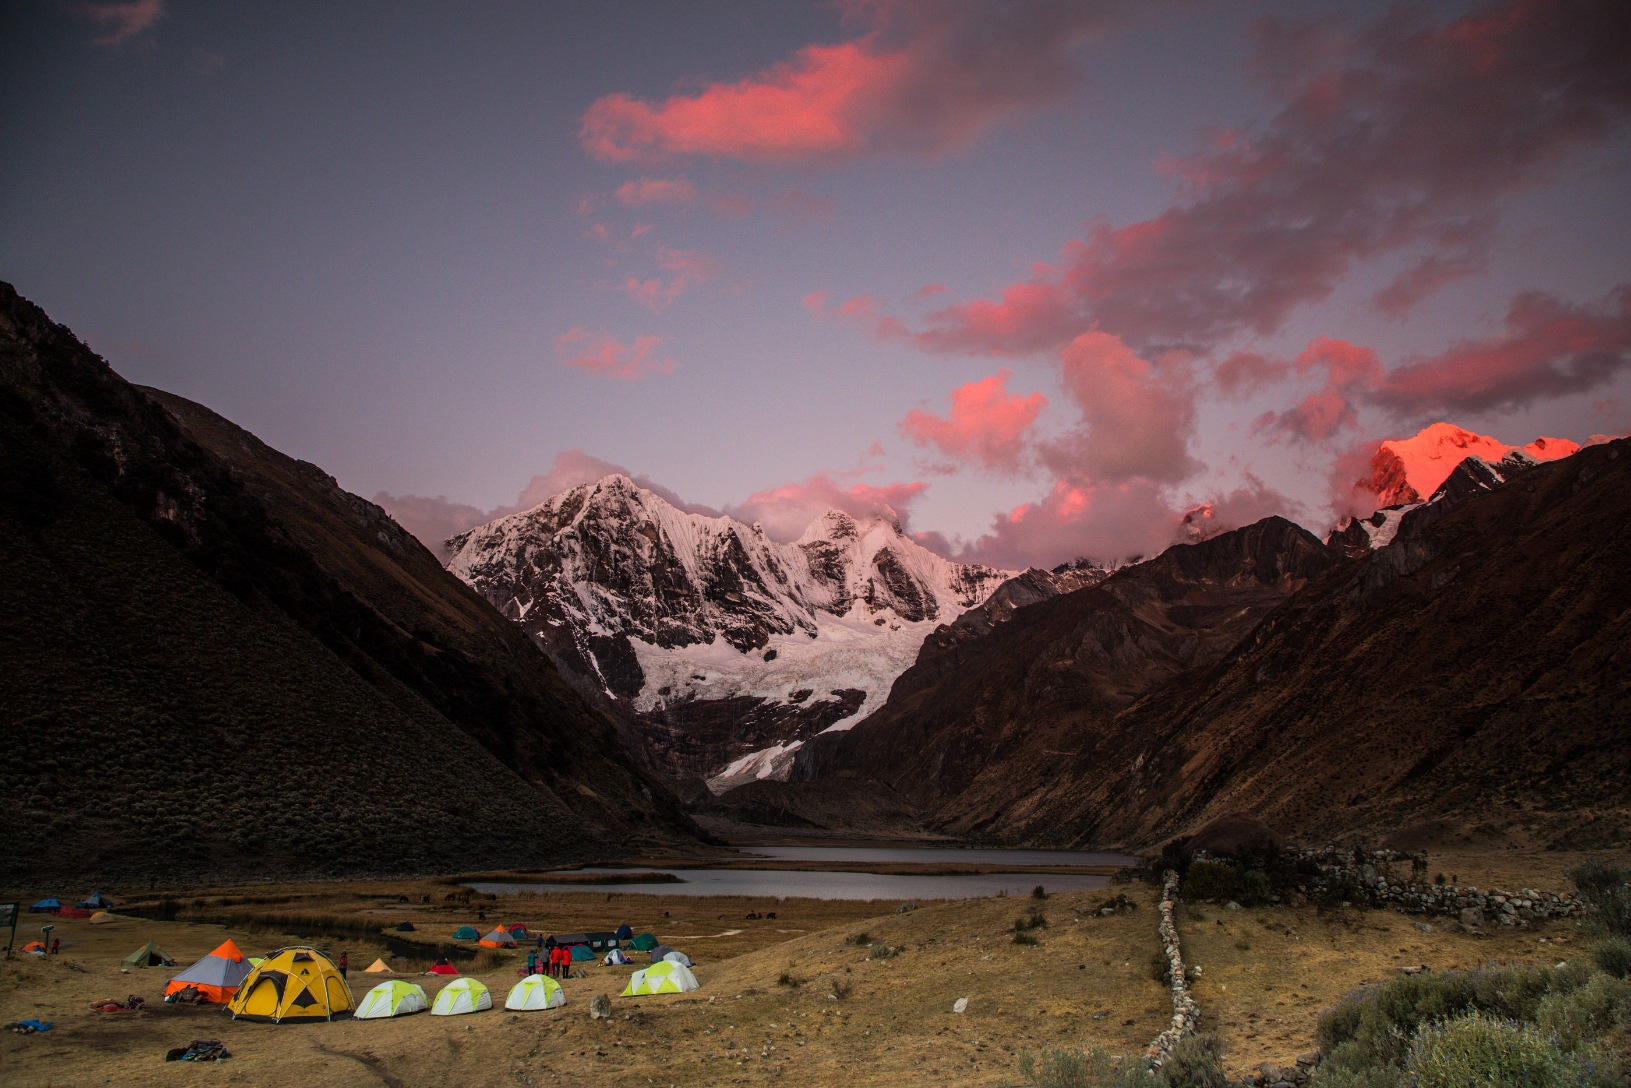 Sunset over a camp ground on the Cordillera Huayhuash Trek